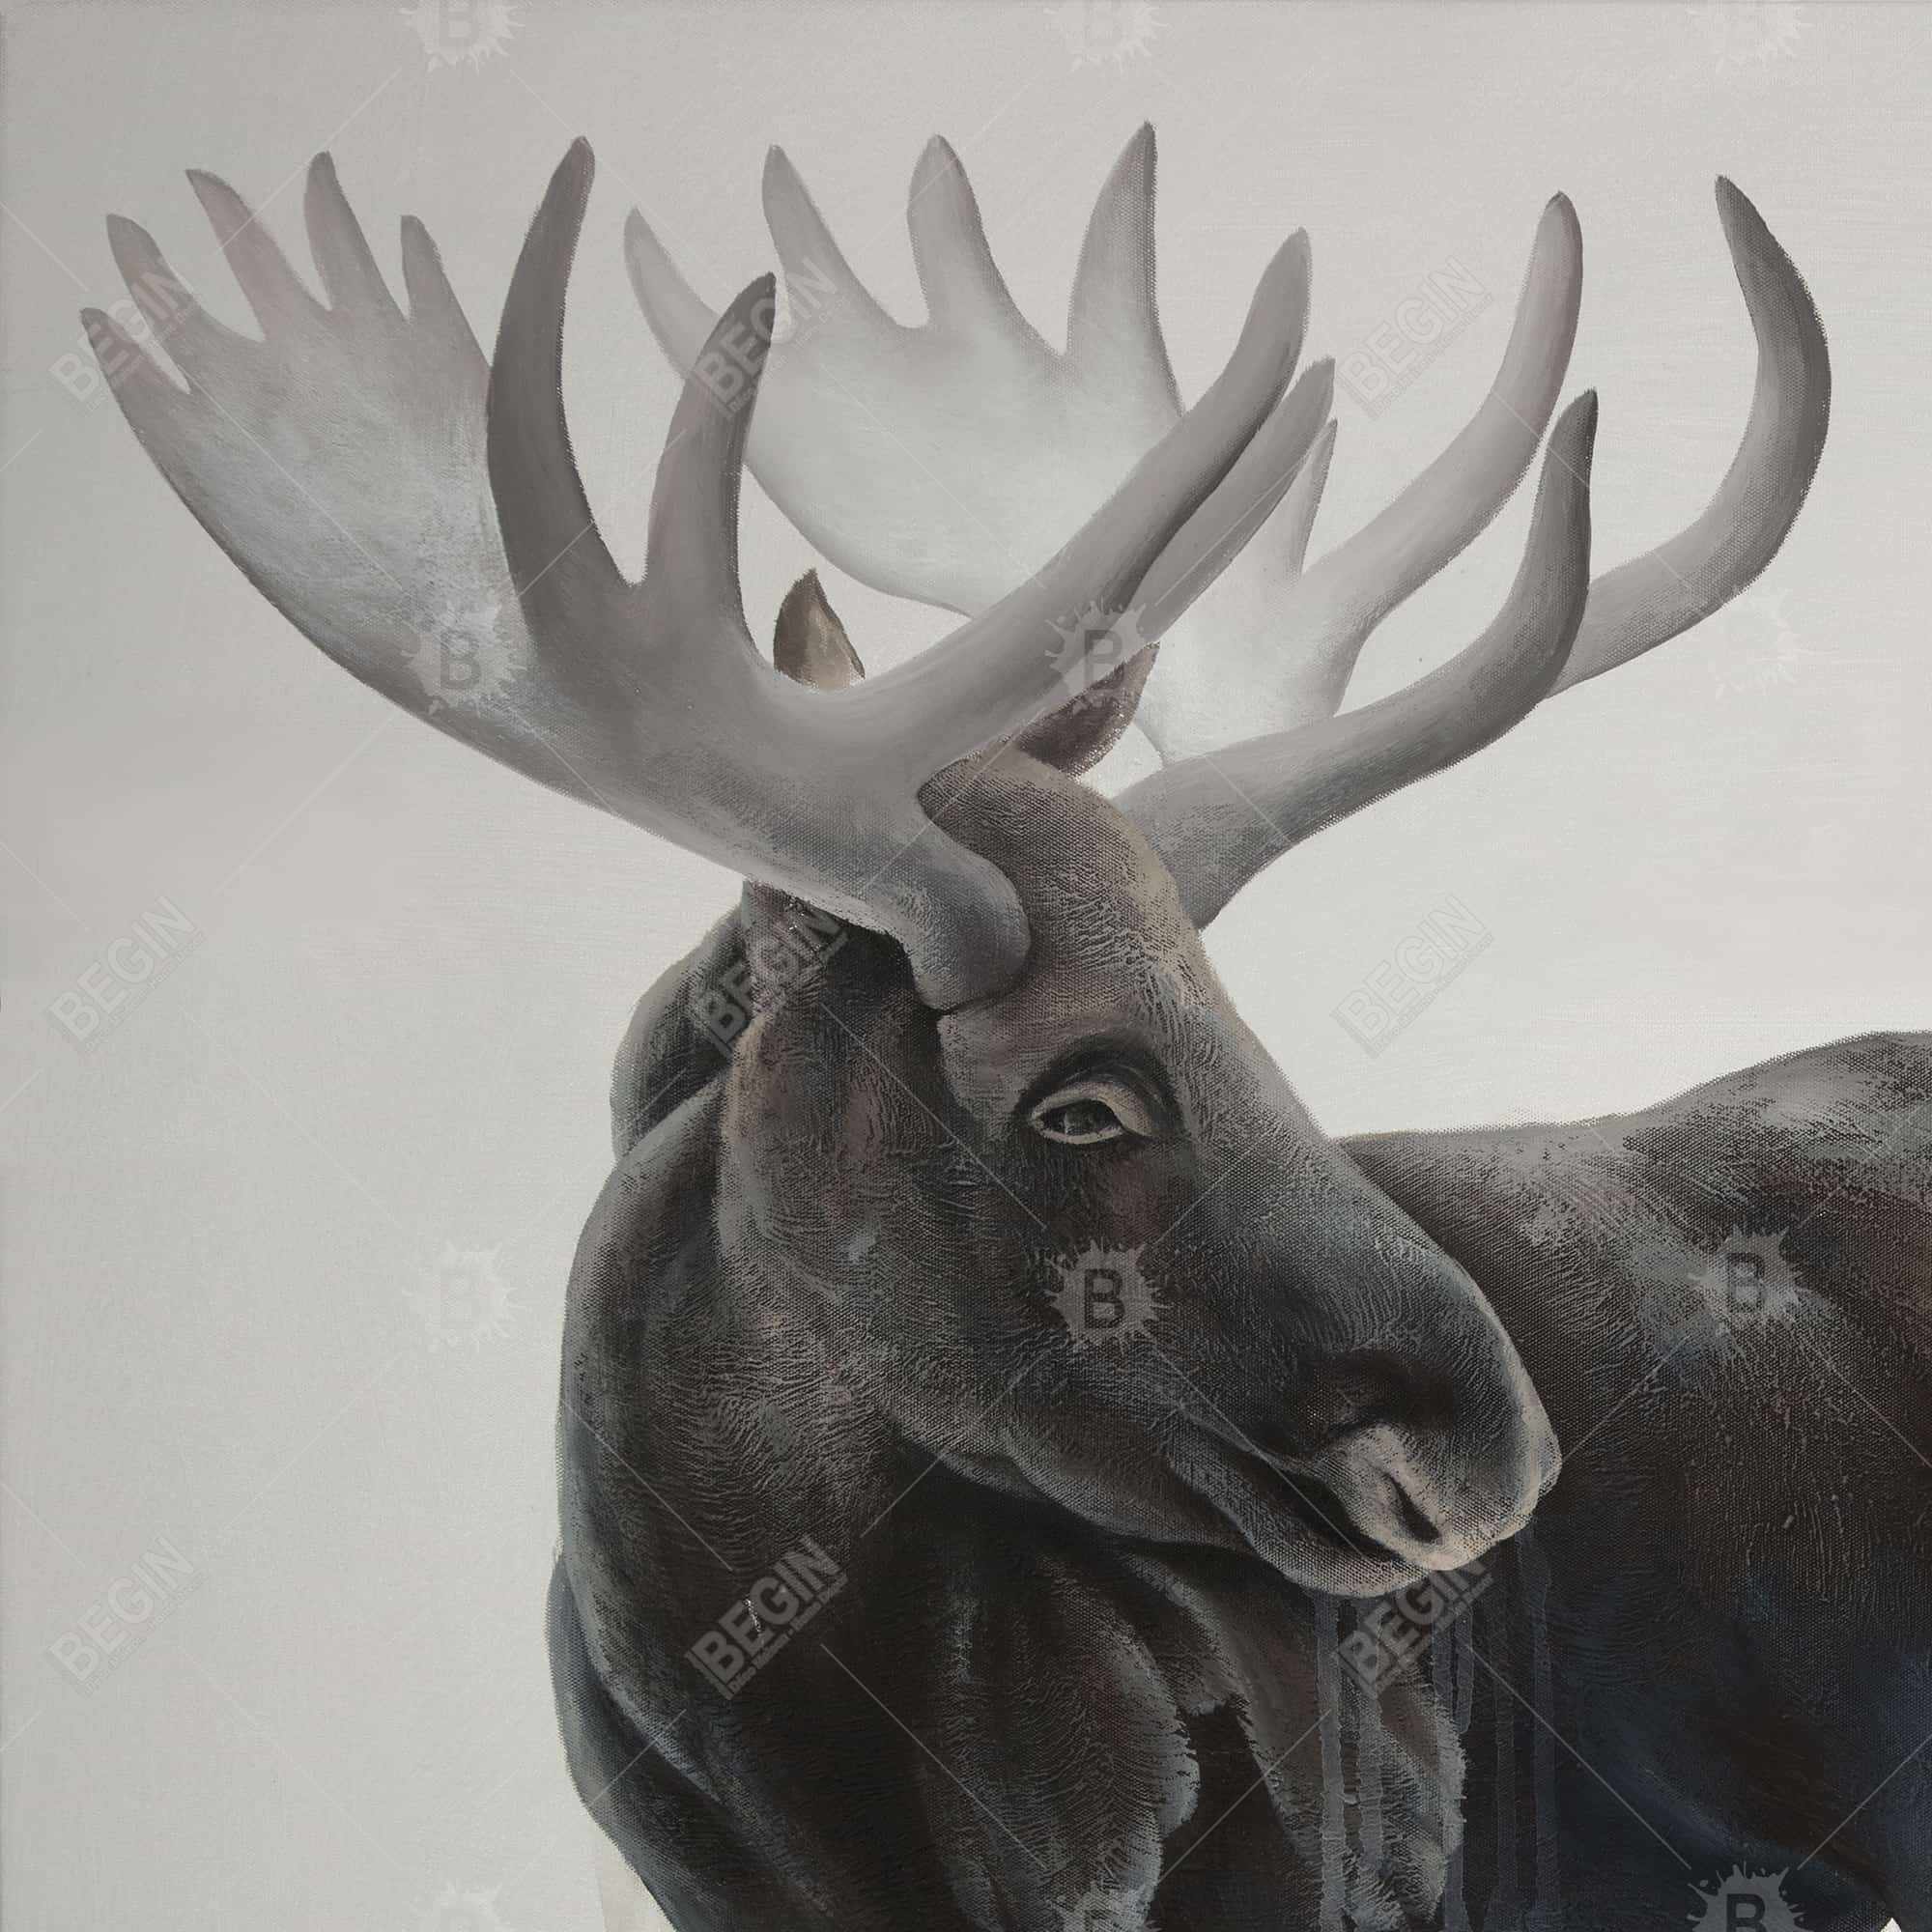 Grayscale moose profile